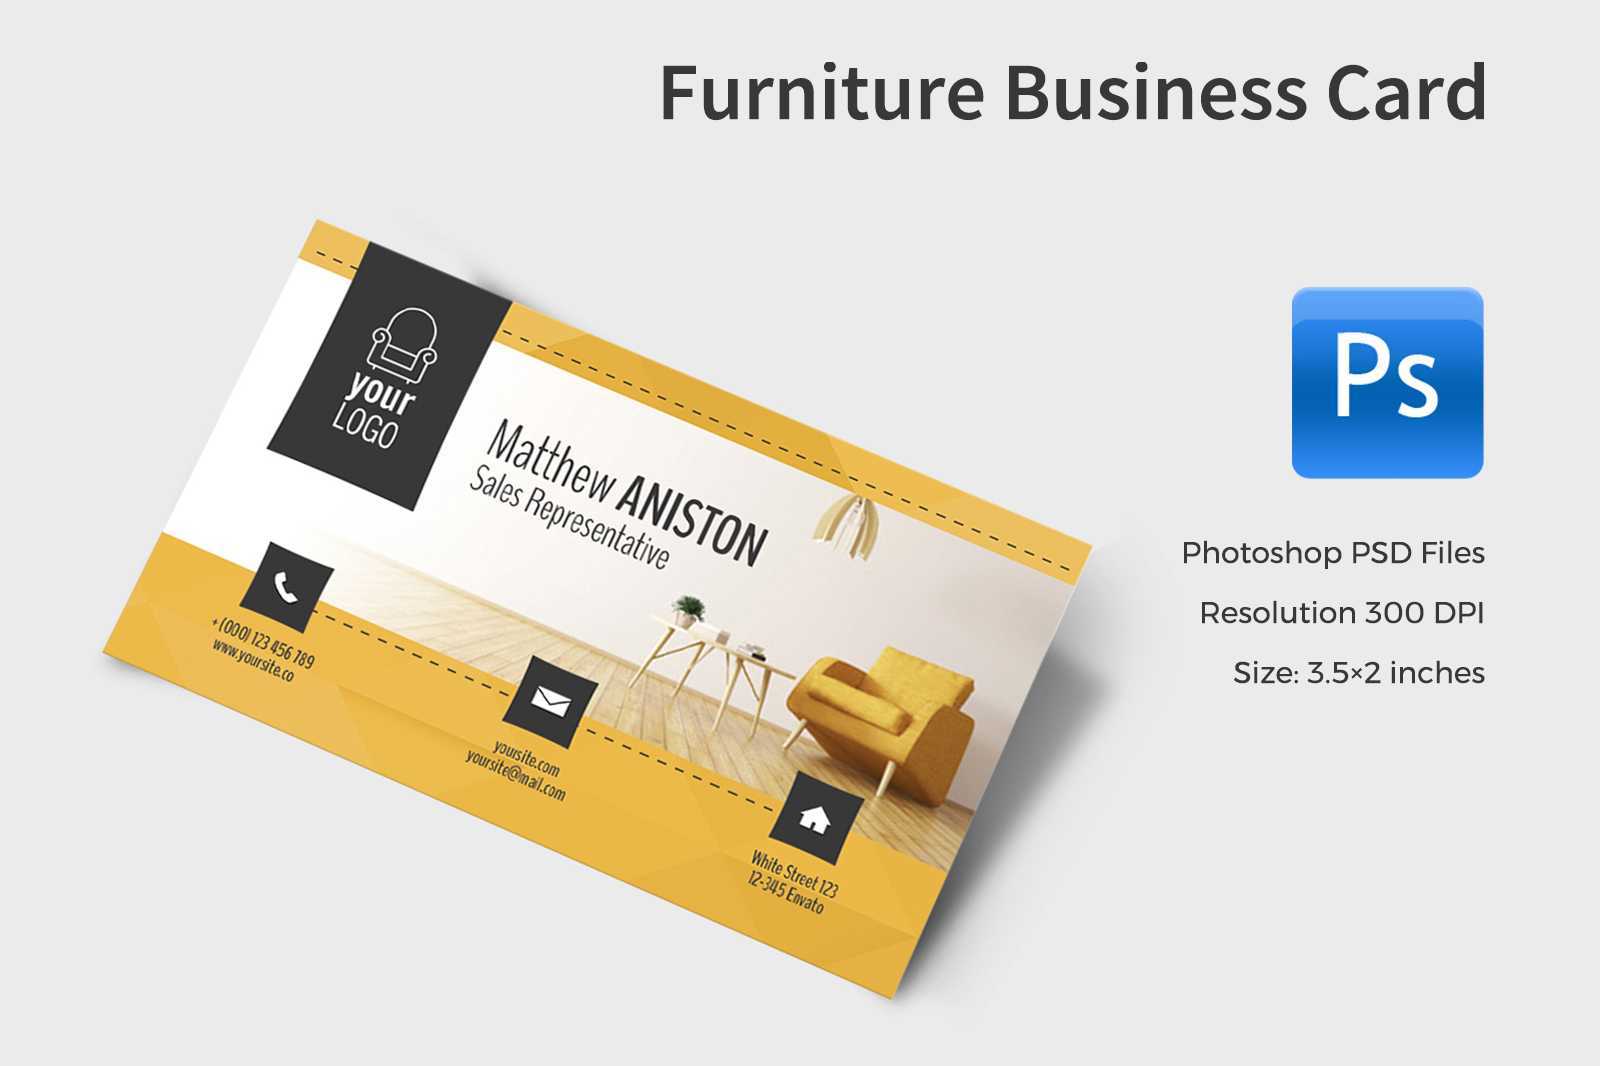 Furniture Business Card In Business Card Templates On With Business Card Template Size Photoshop